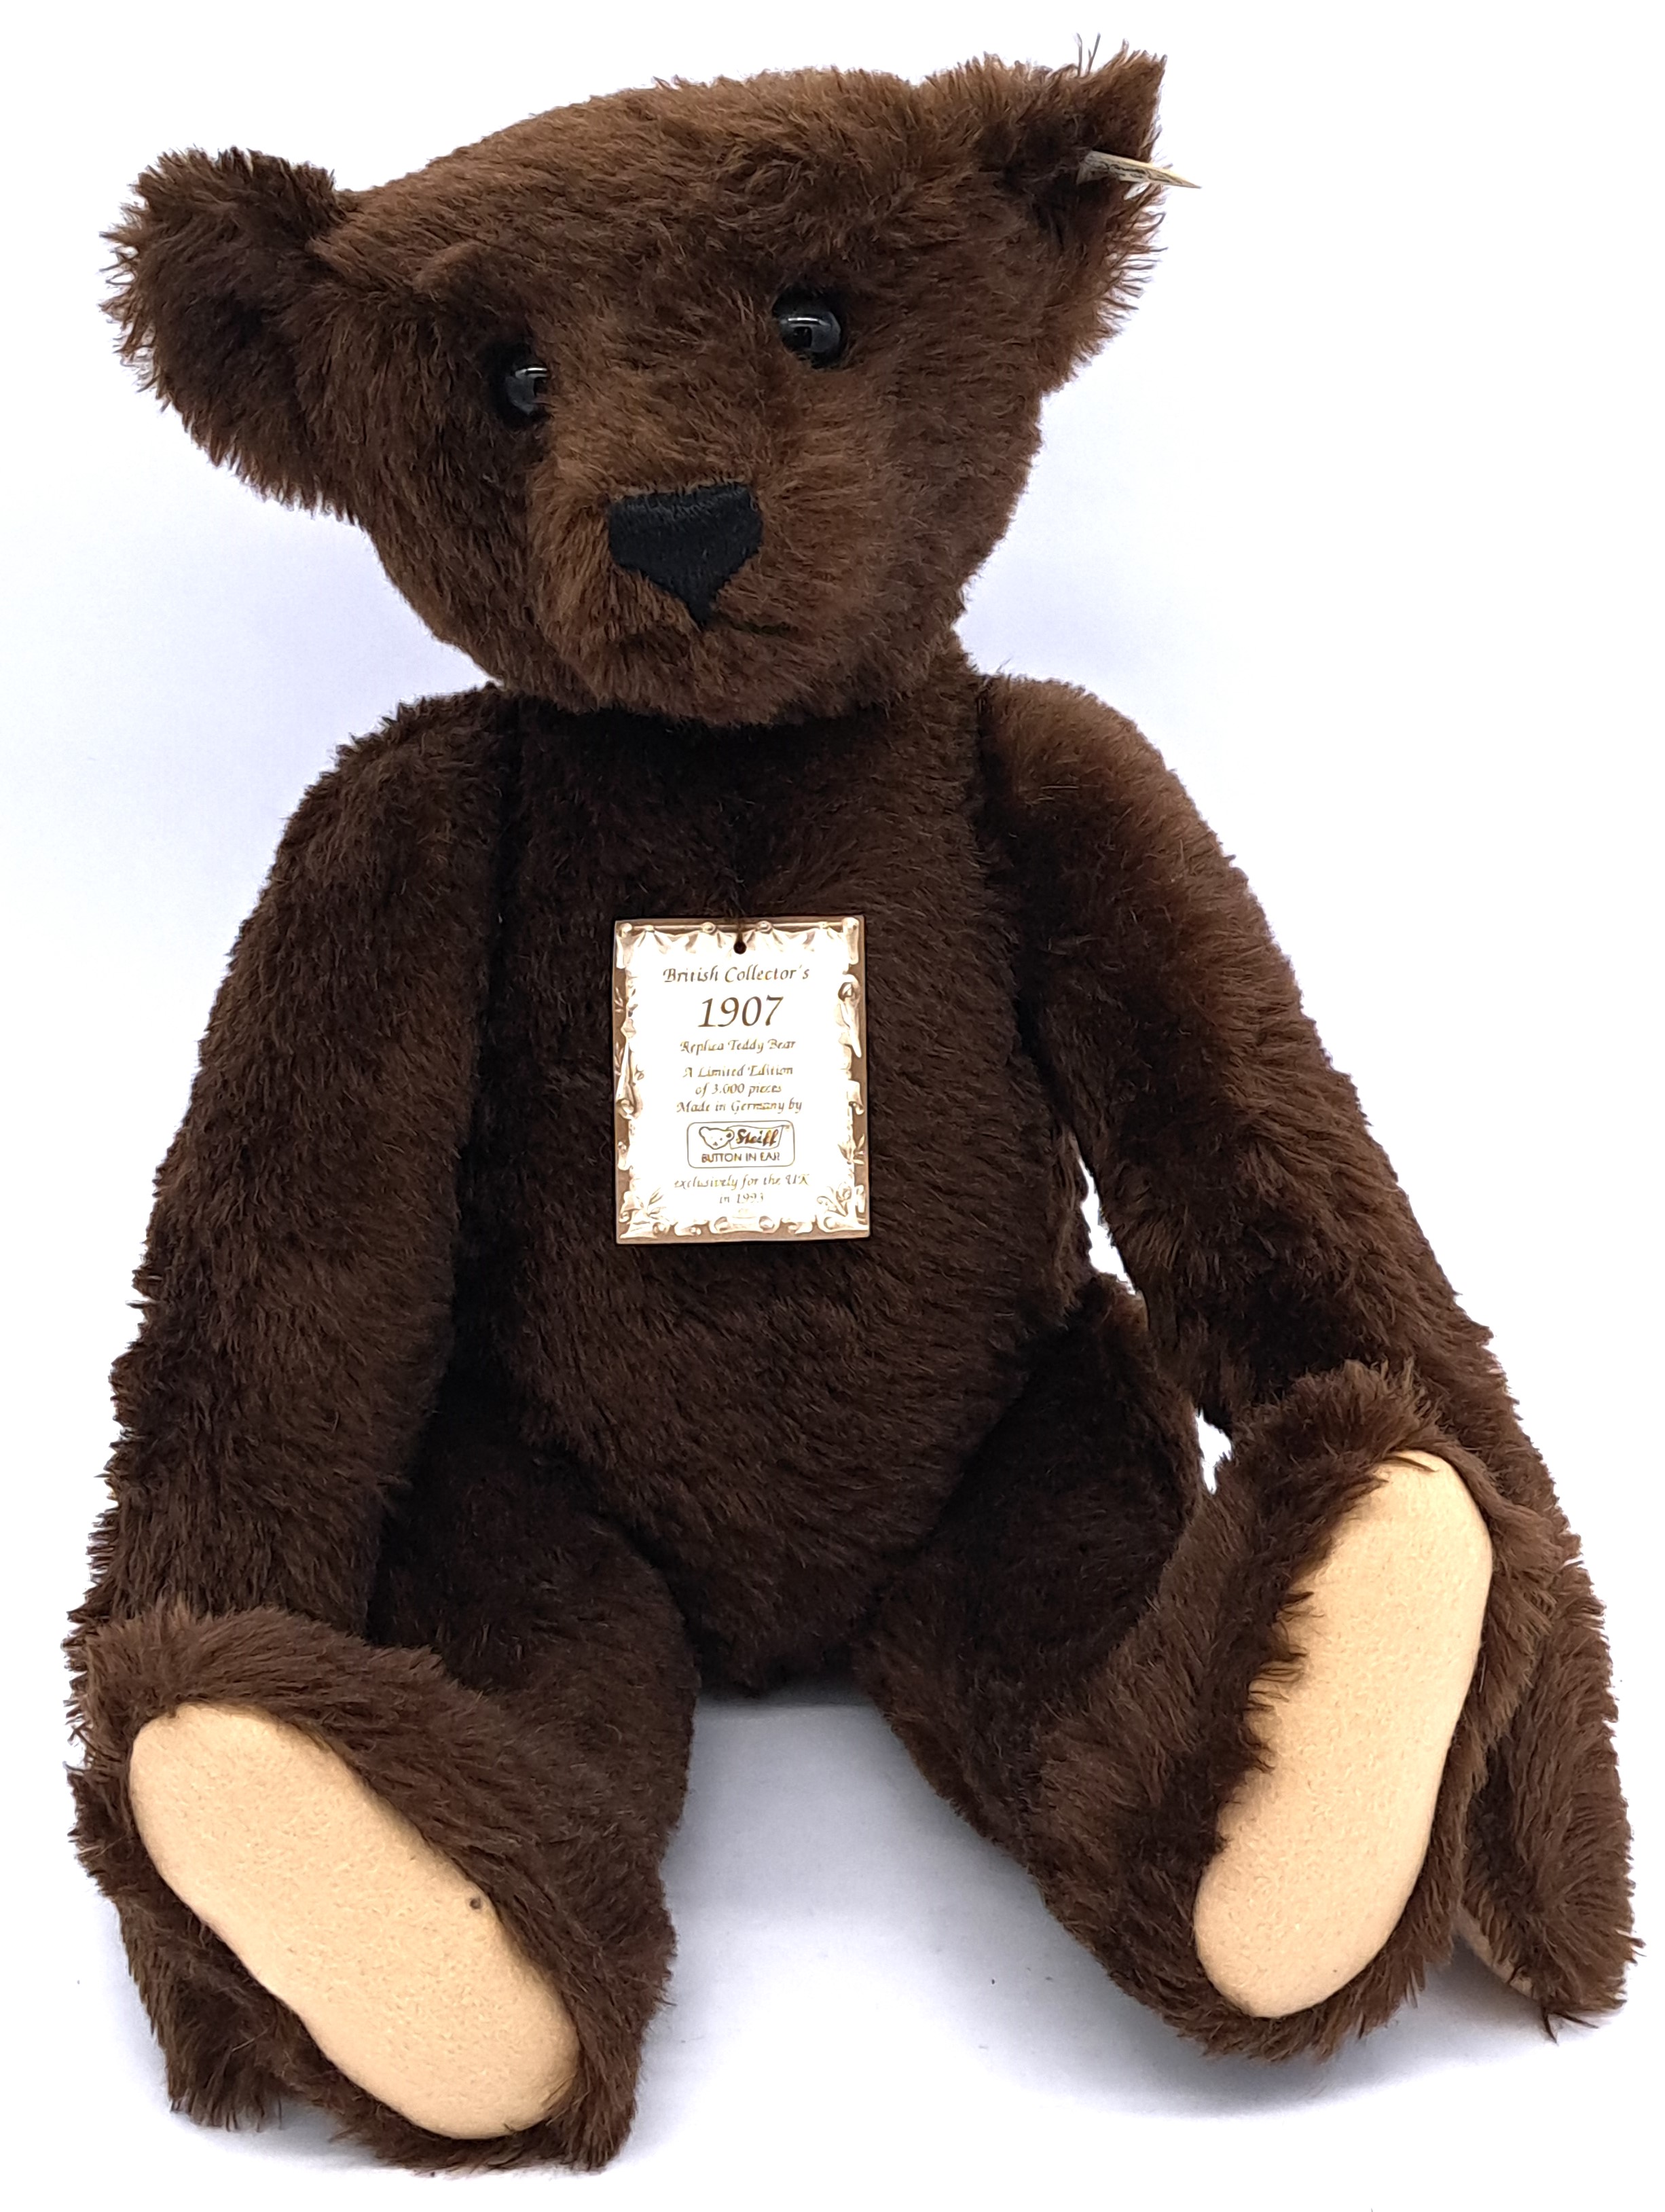 Steiff British Collectors 1907 replica teddy bear - Image 2 of 2